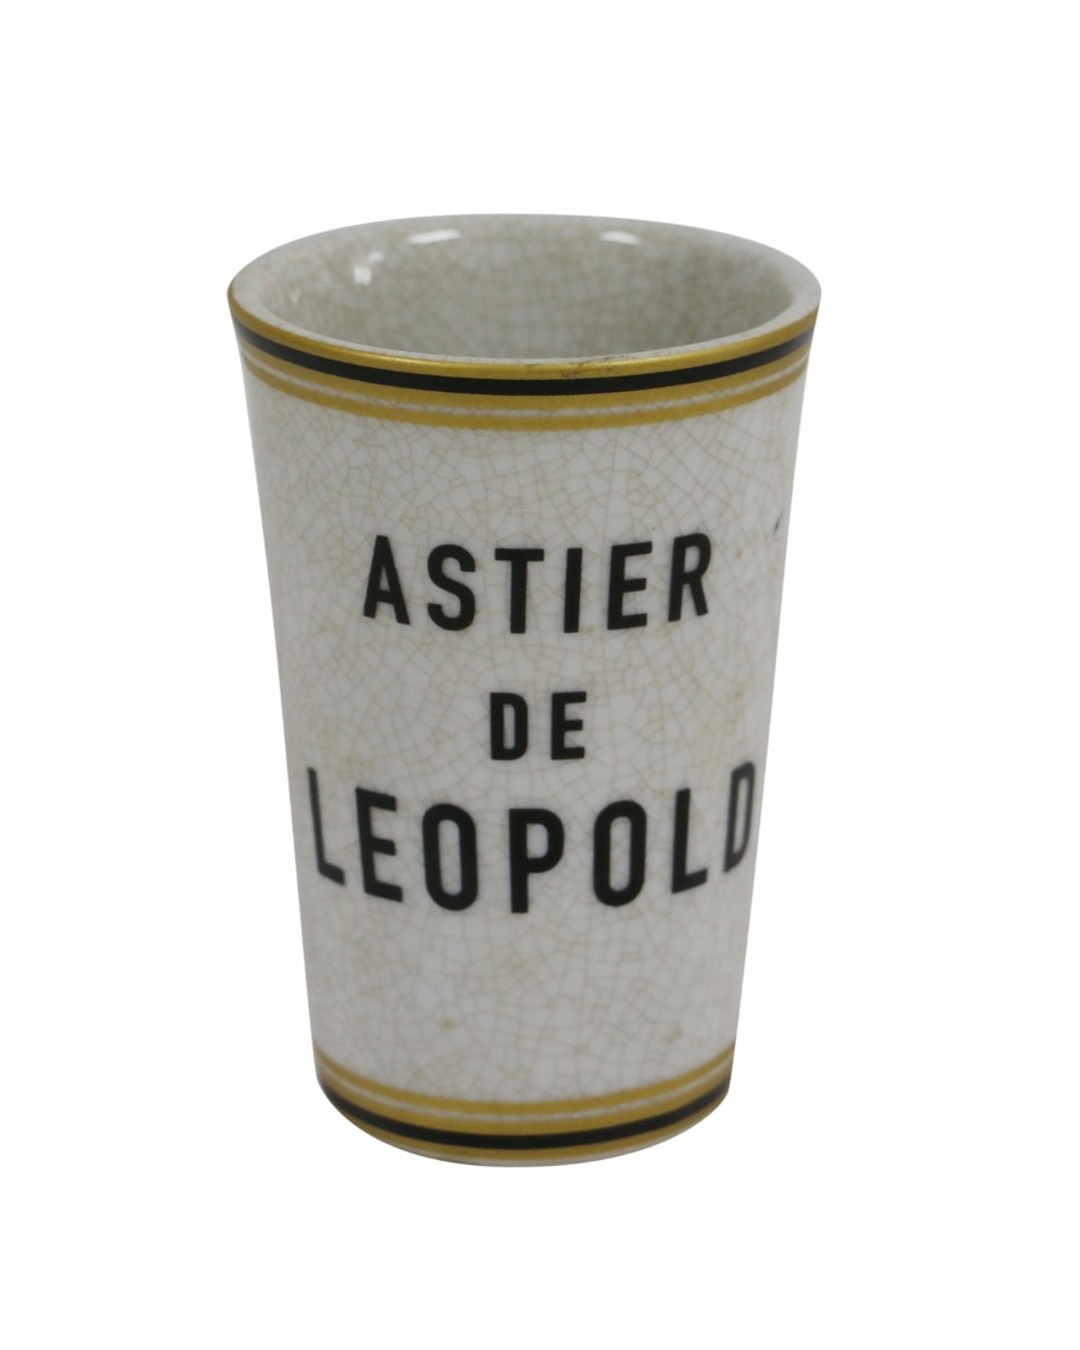 Astier de leopald cup